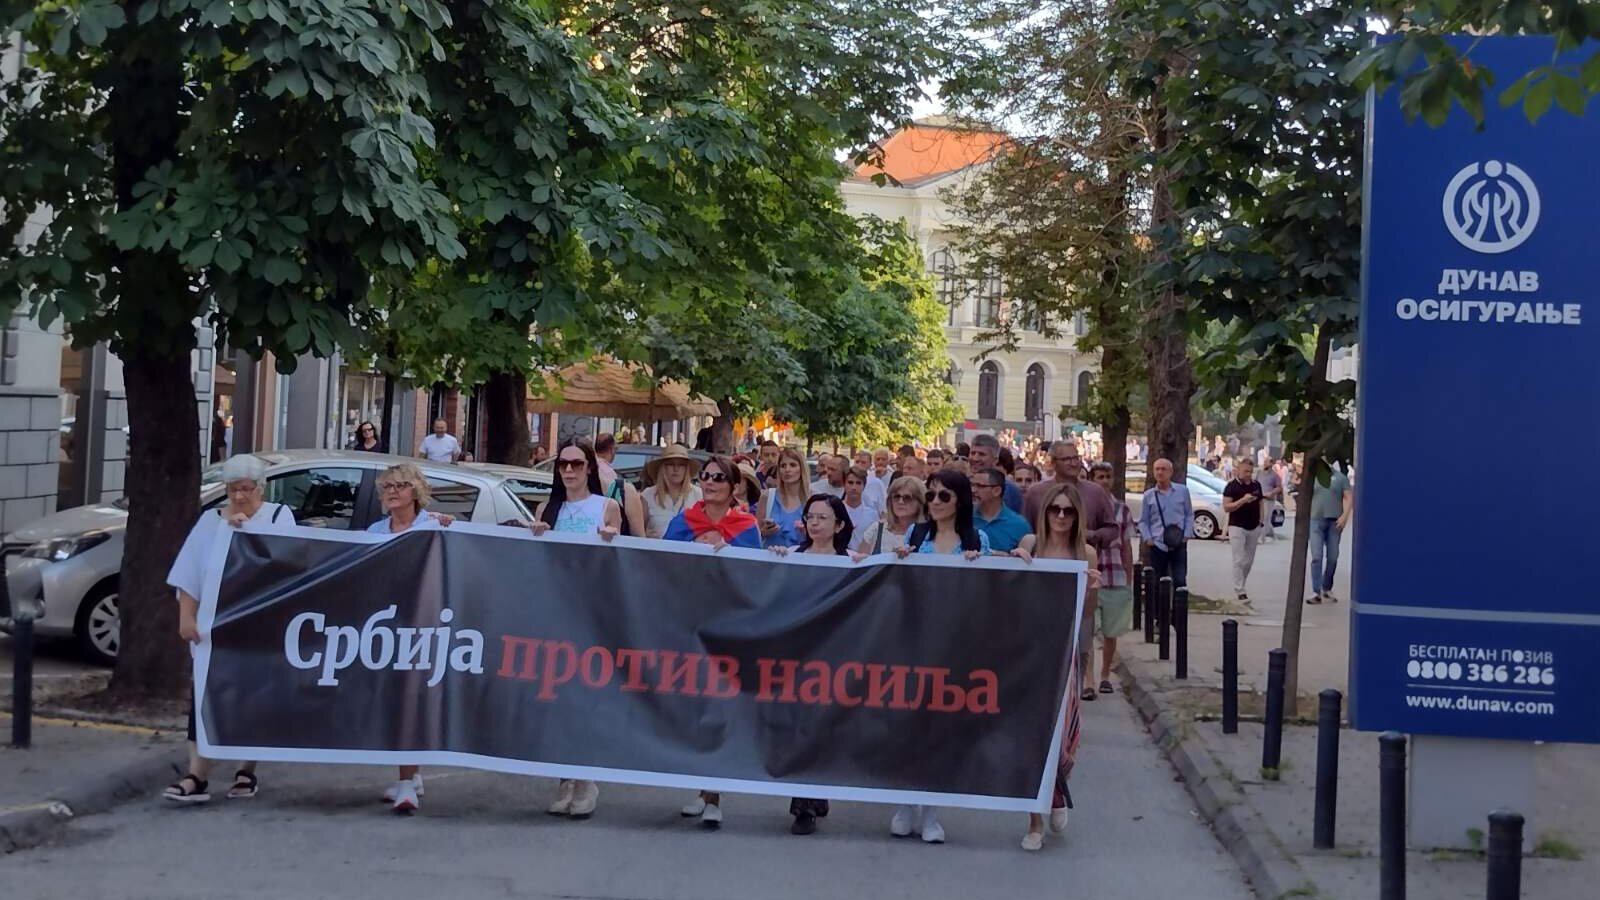 Završen protest Srbija protiv nasilja: Performans, džingl sa Vučićem i Gašićem i 5.000 građana ispred PU Beograd (FOTO, VIDEO) 10